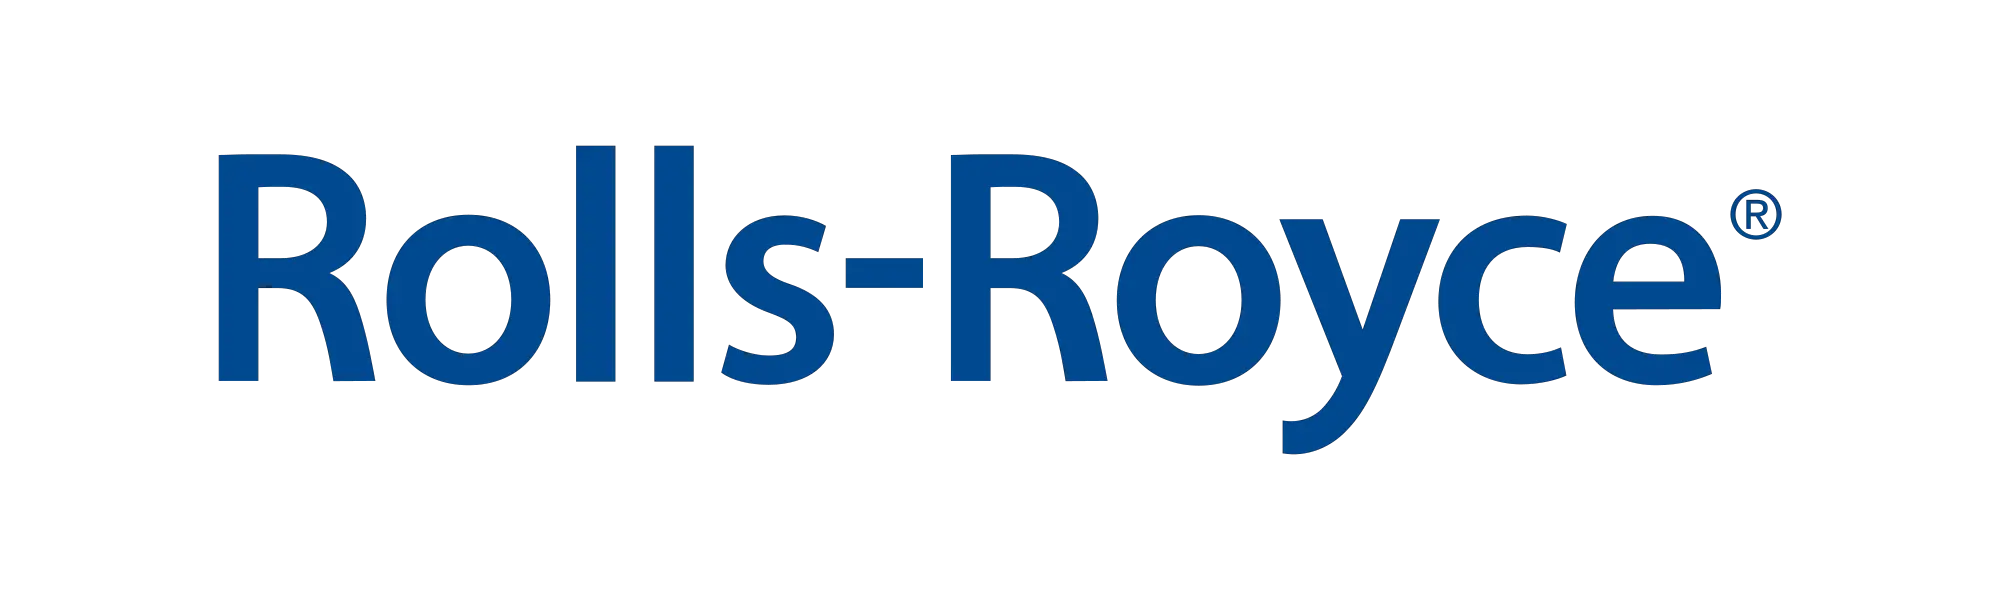 Rolls-Royce-text-logo-2000x600